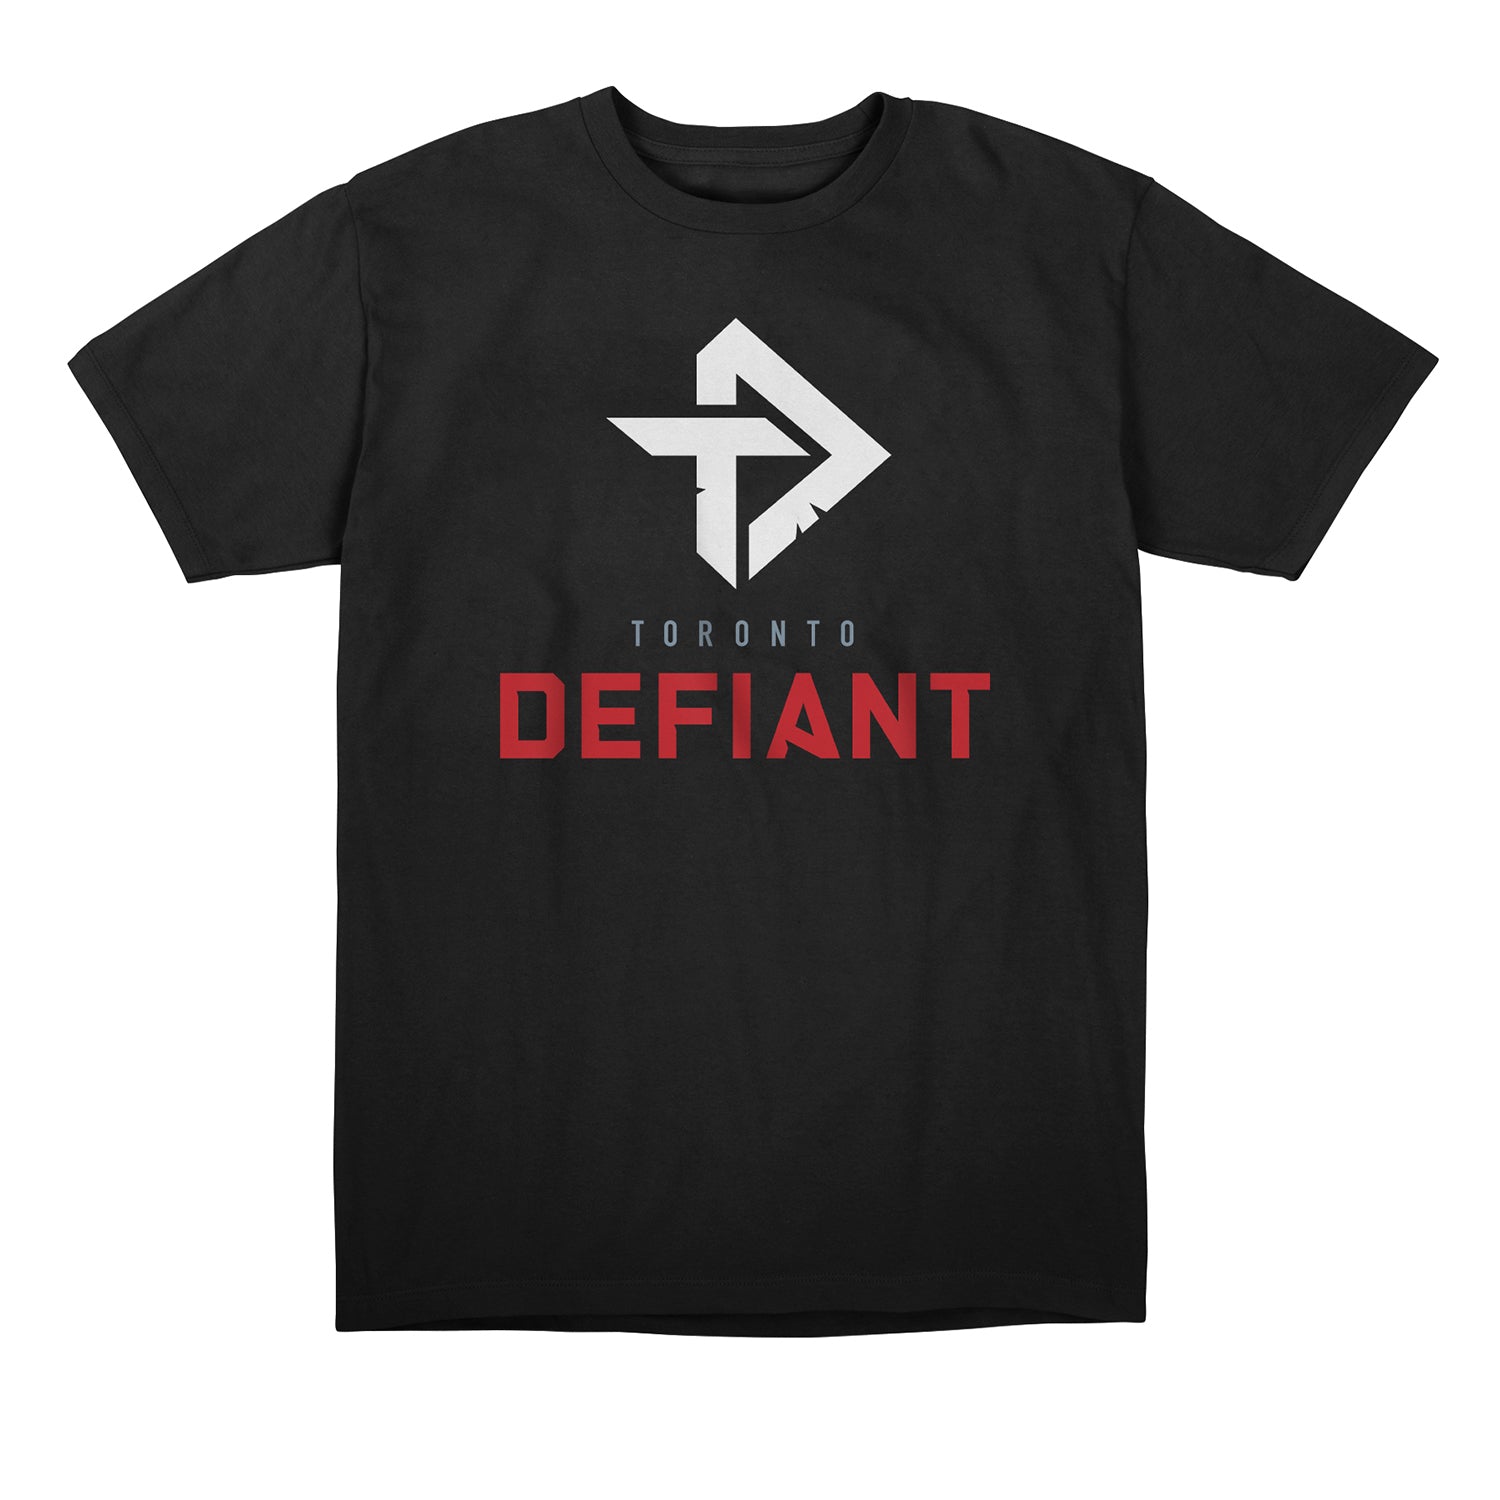 Toronto Defiant Black Team Identity T-Shirt - Front View